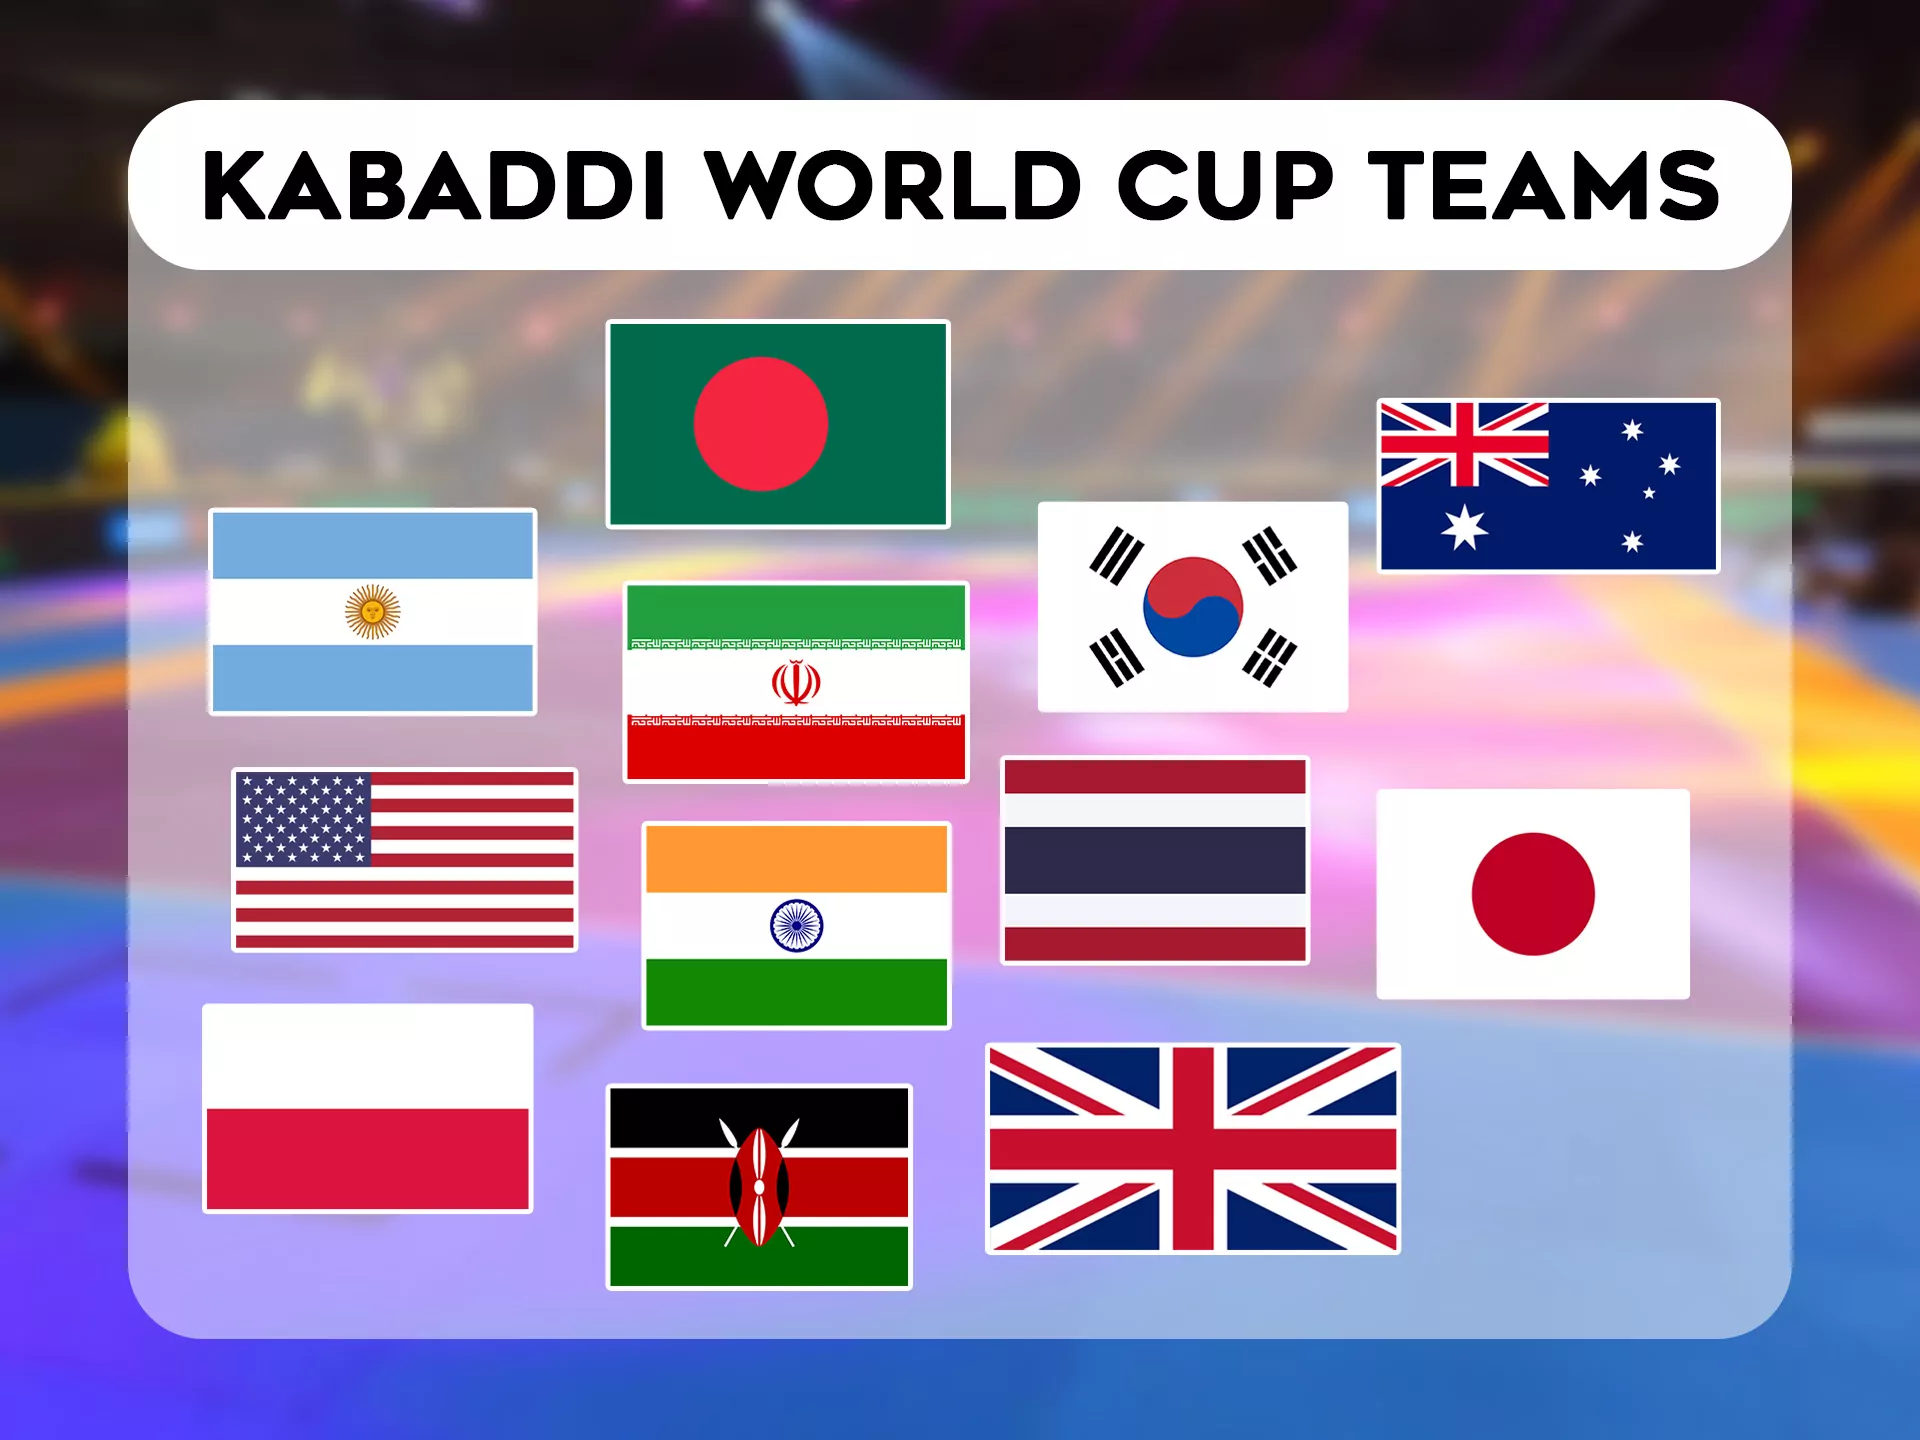 Varied list of national kabaddi teams for bet on.